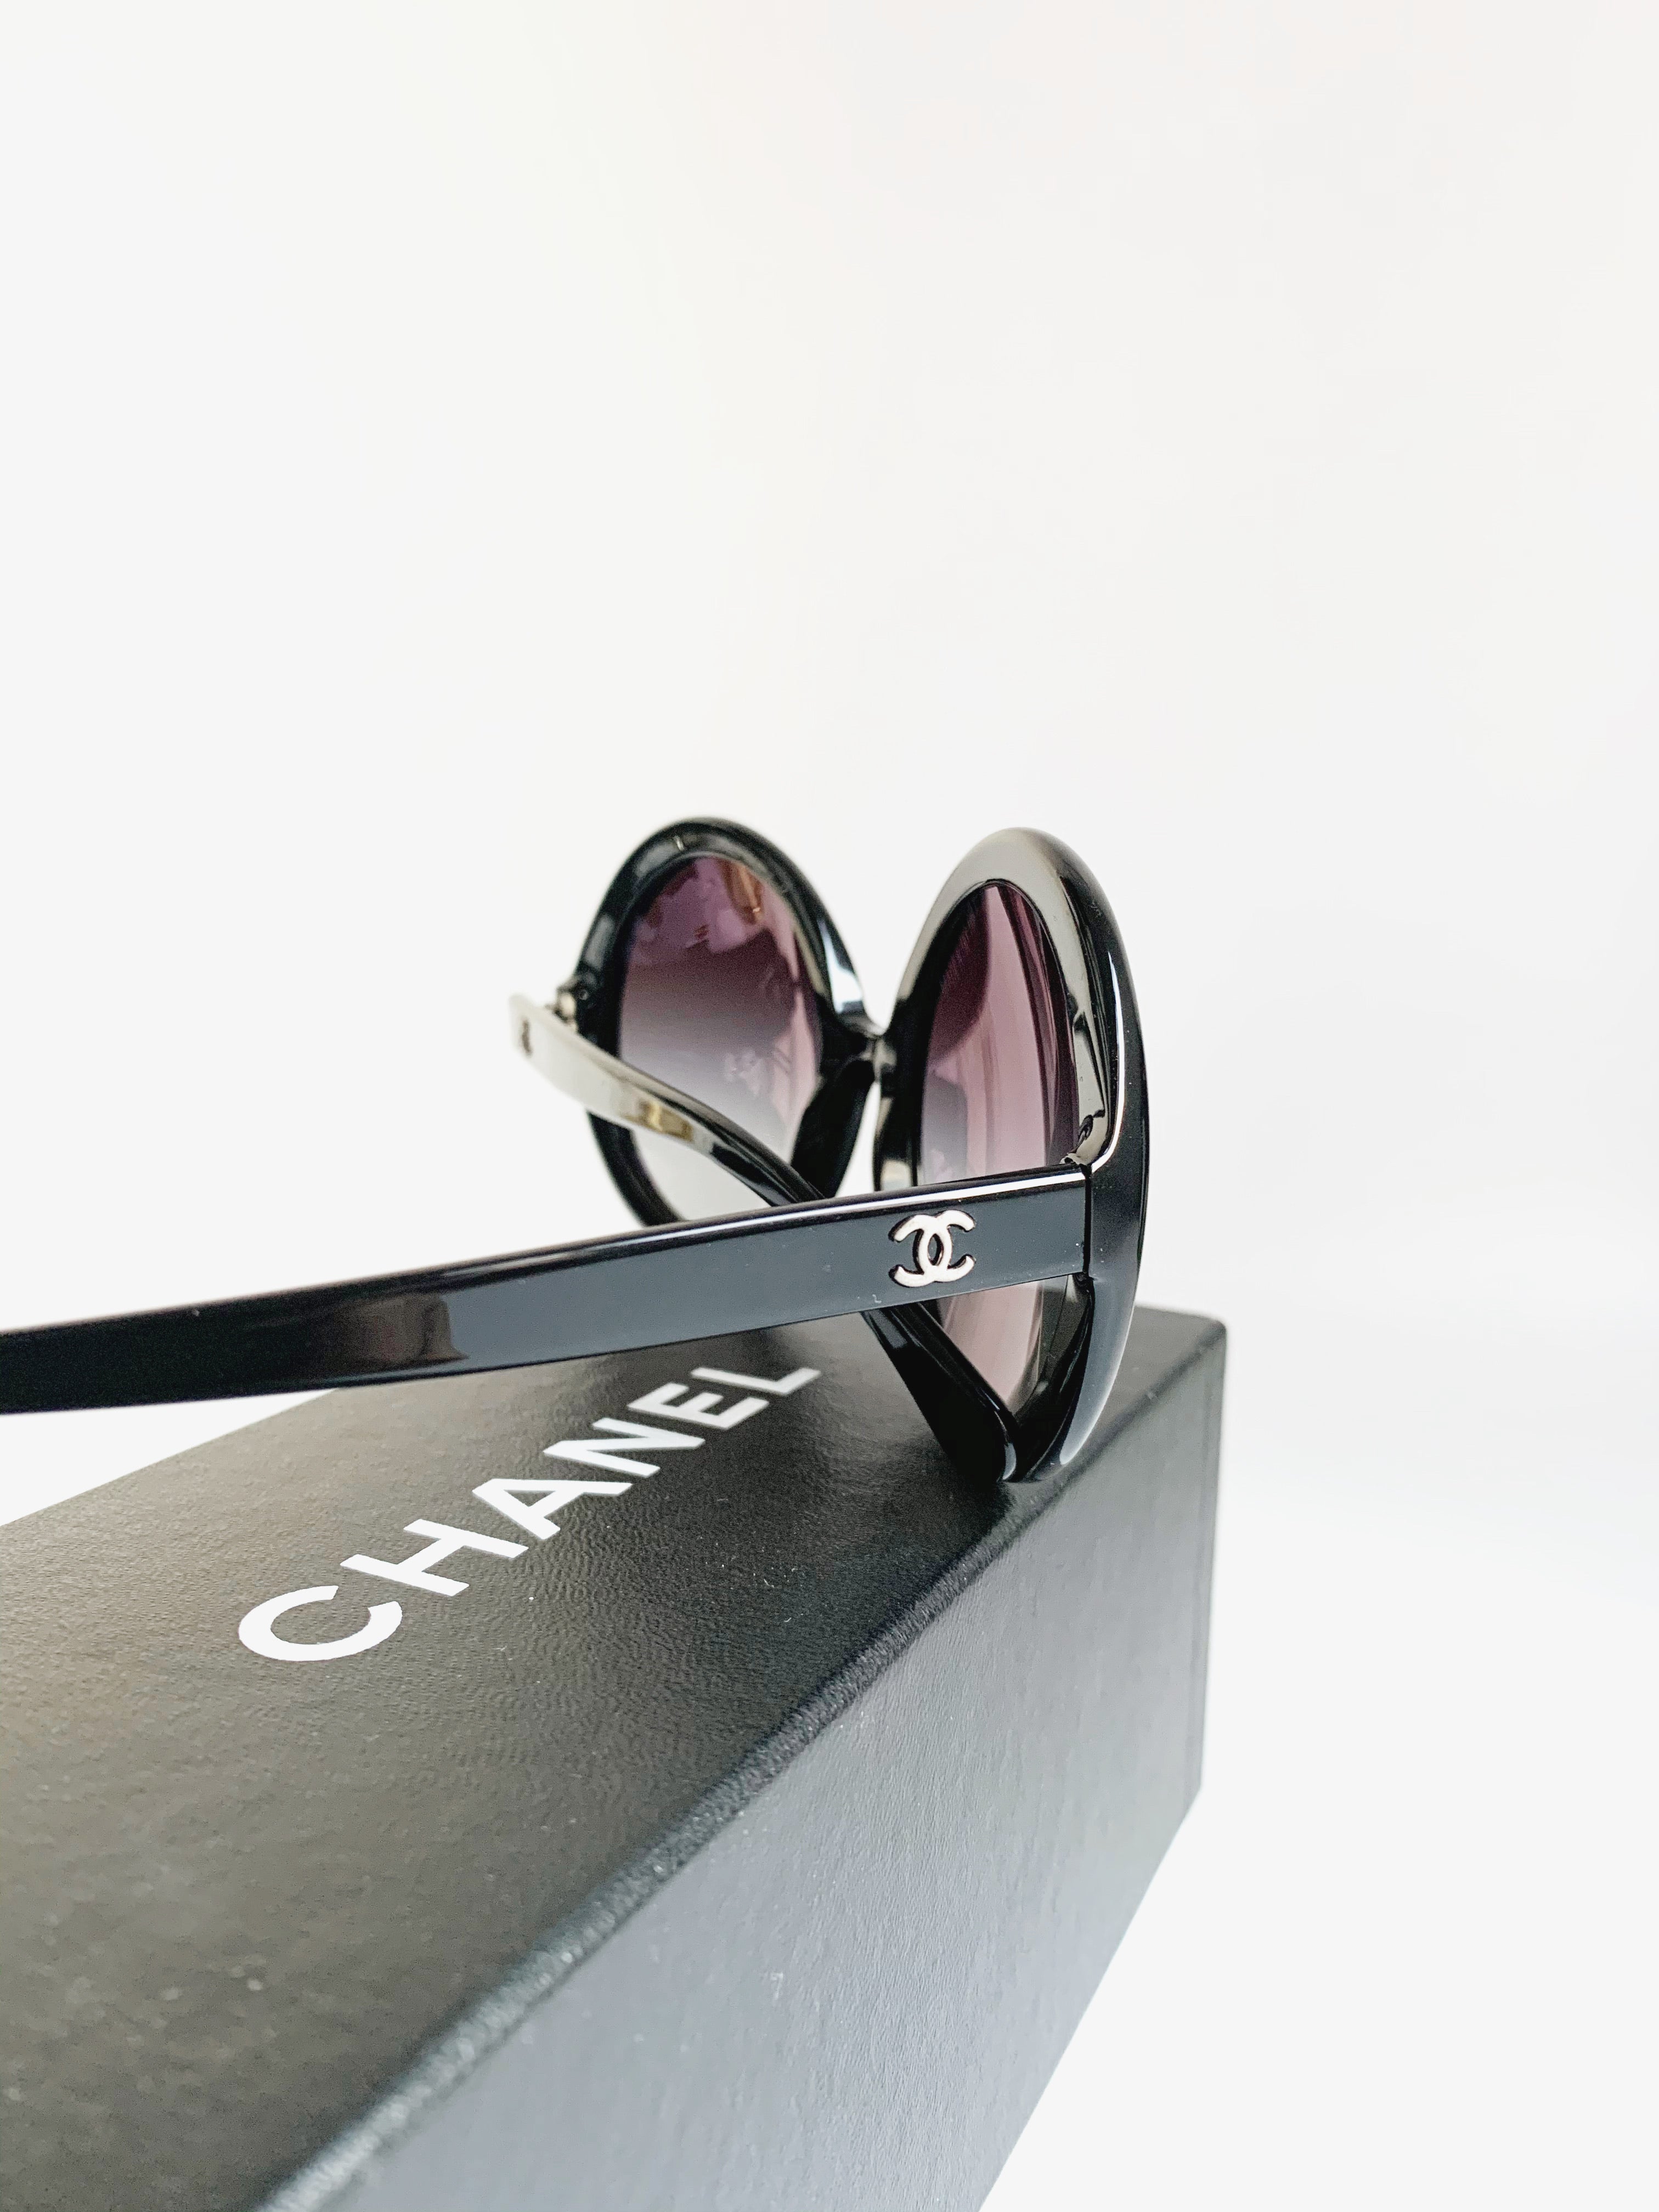 Chanel Rectangle Sunglasses - Acetate, Tweed and Diamanté, Multicolor - Polarized - UV Protected - Women's Sunglasses - 9130 1282/S6